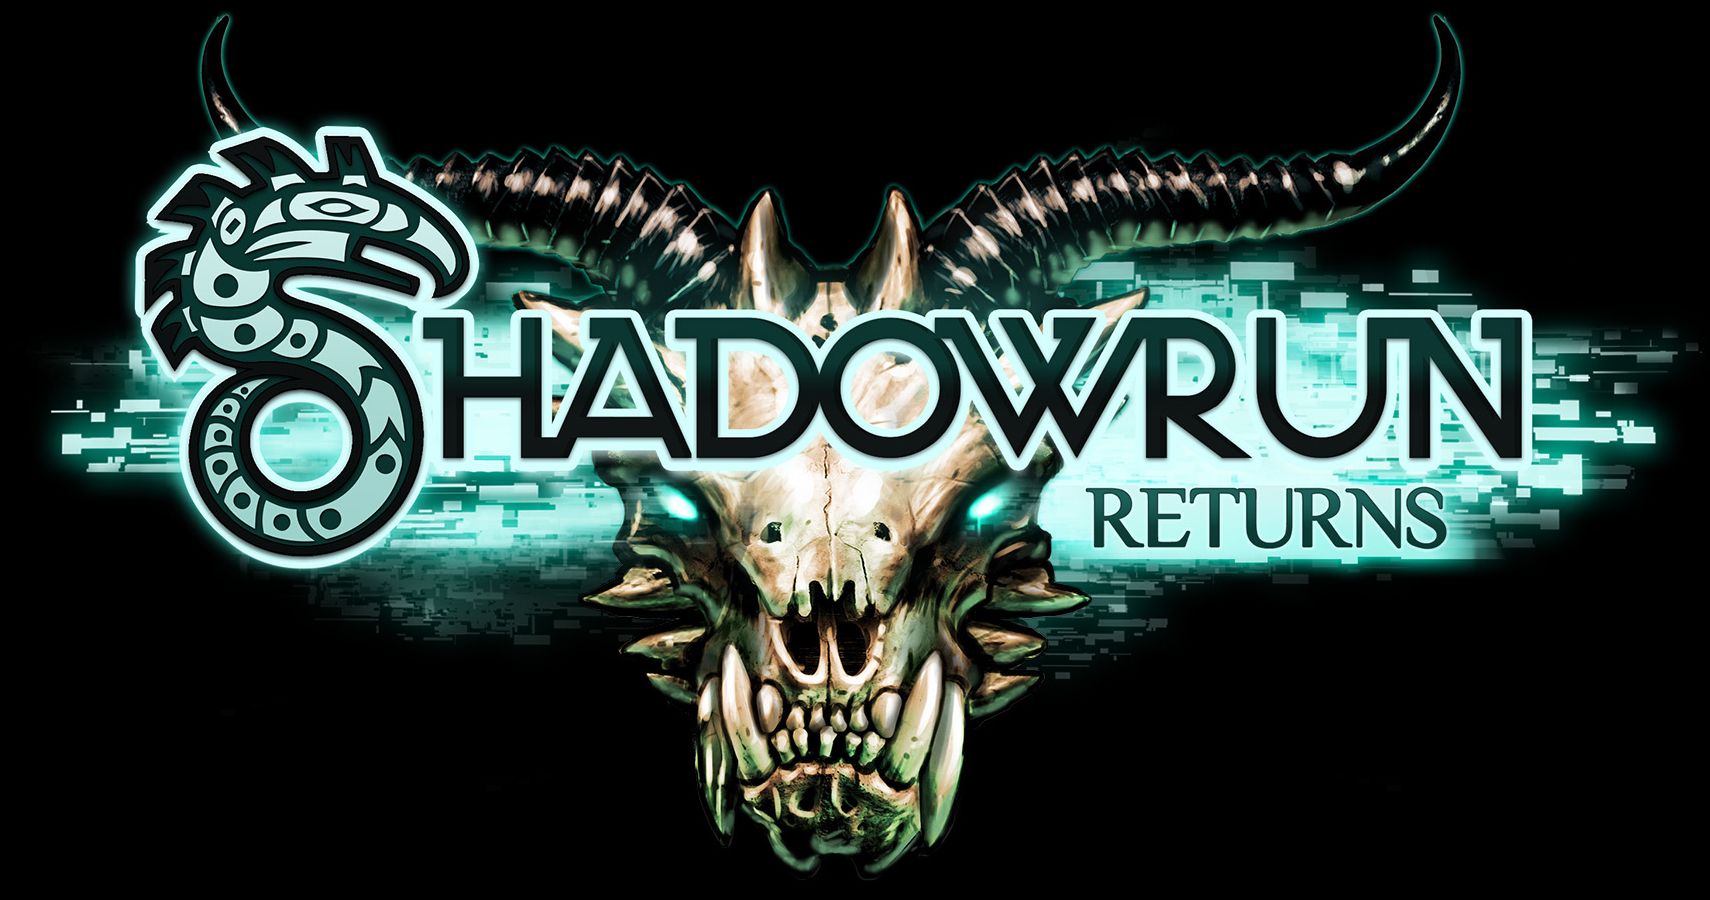 Shadowrun Returns thanks to a successful Kickstarter by Harebrained Schemes